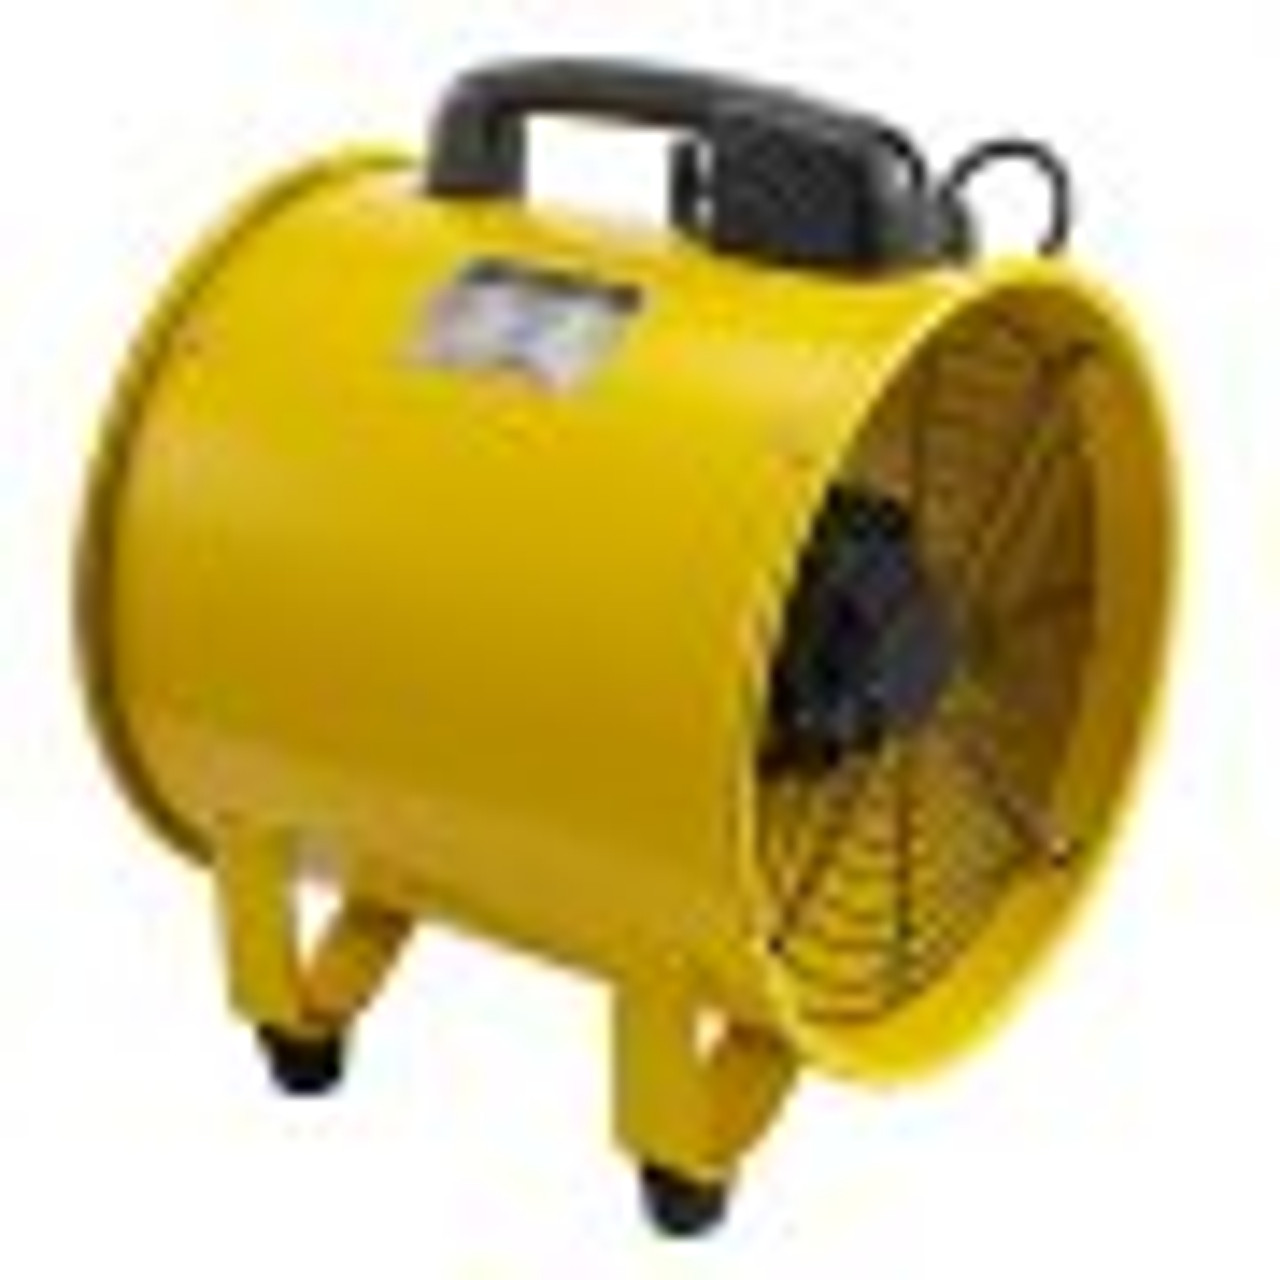 Utility Blower Fan, 12 Inches, 550W 1471 & 2295 CFM High Velocity